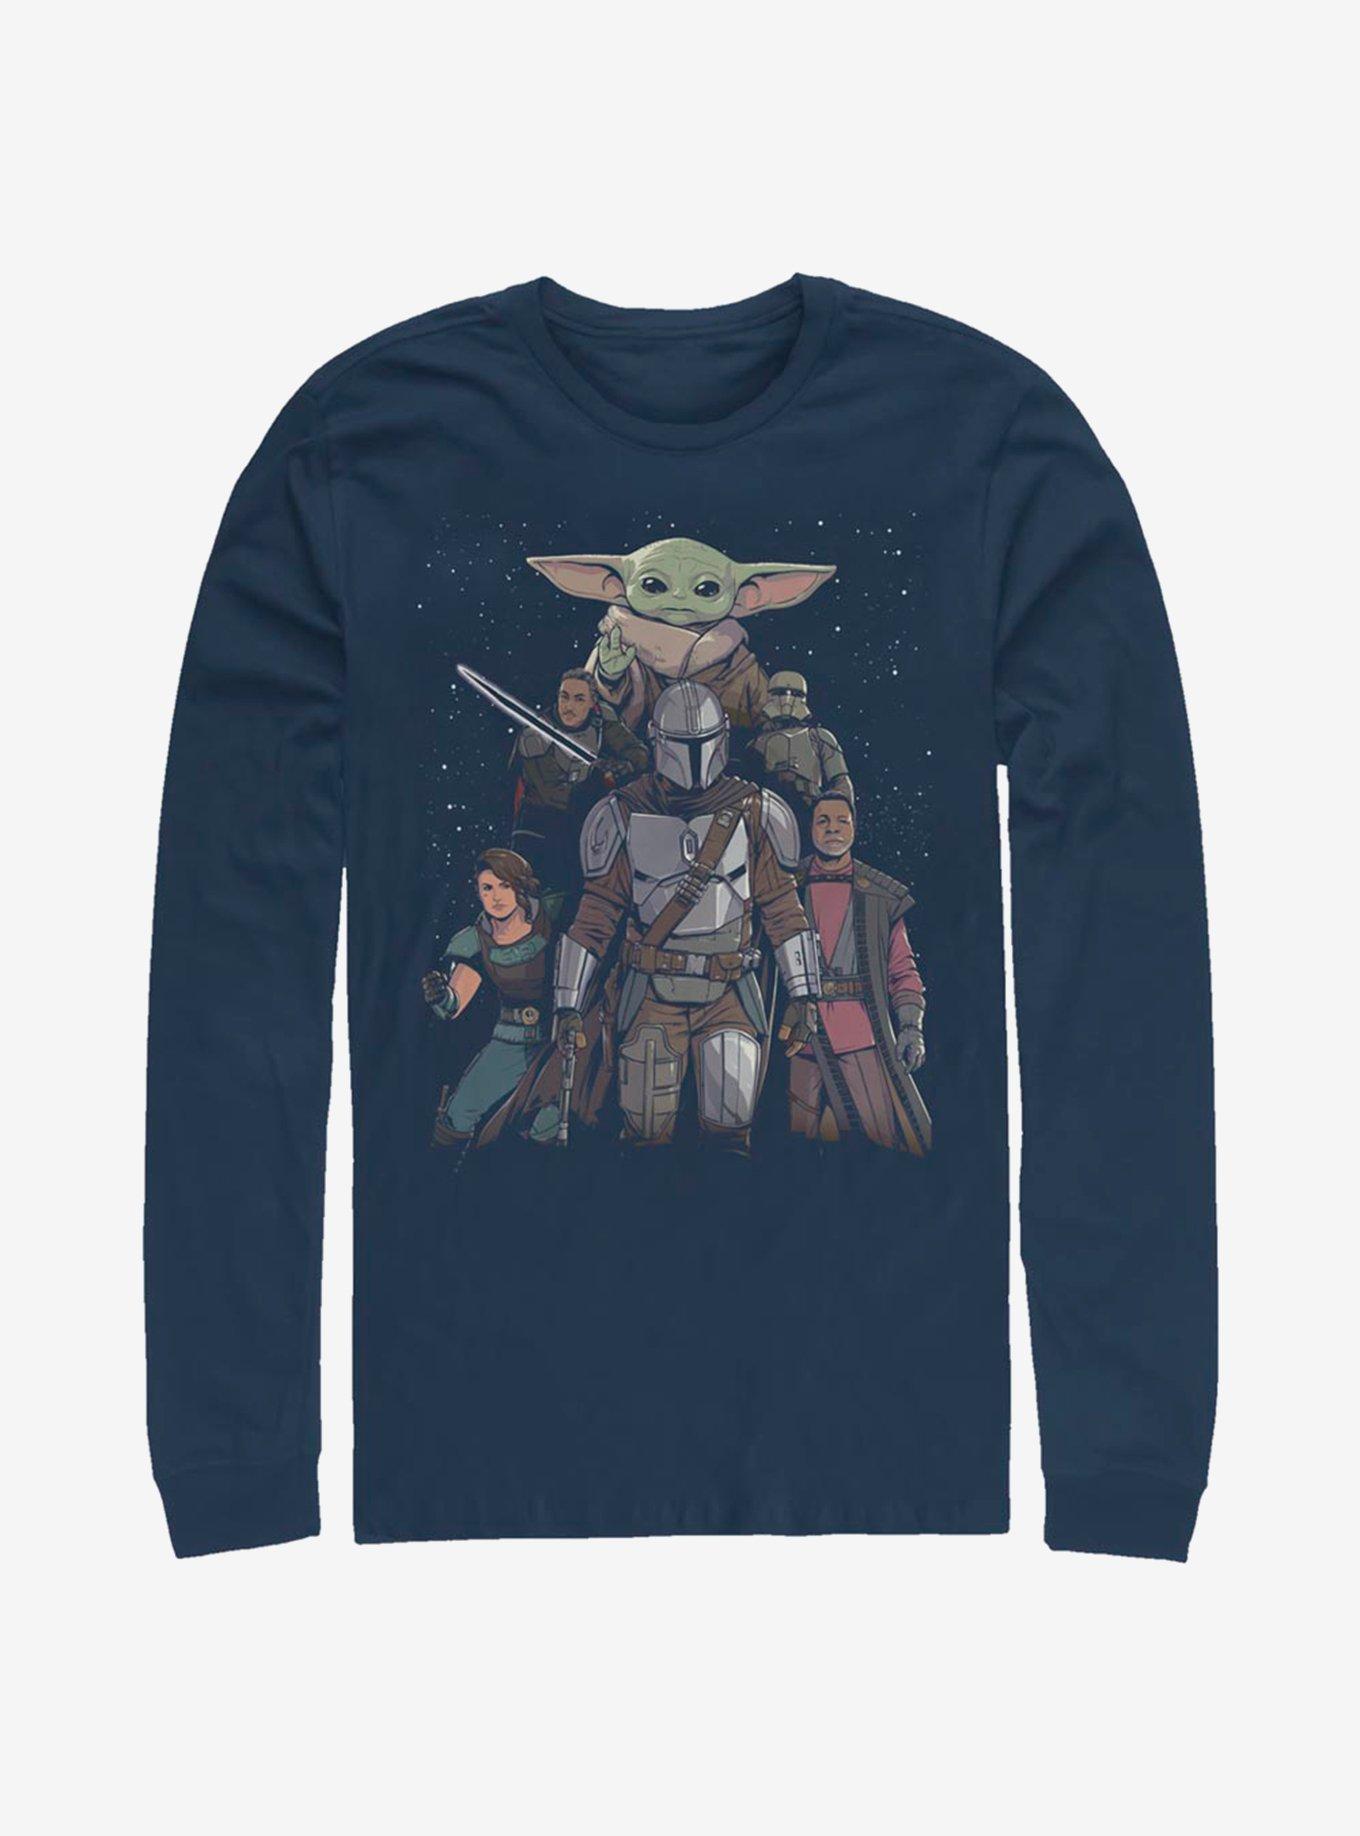 Star Wars The Mandalorian Poster Long-Sleeve T-Shirt